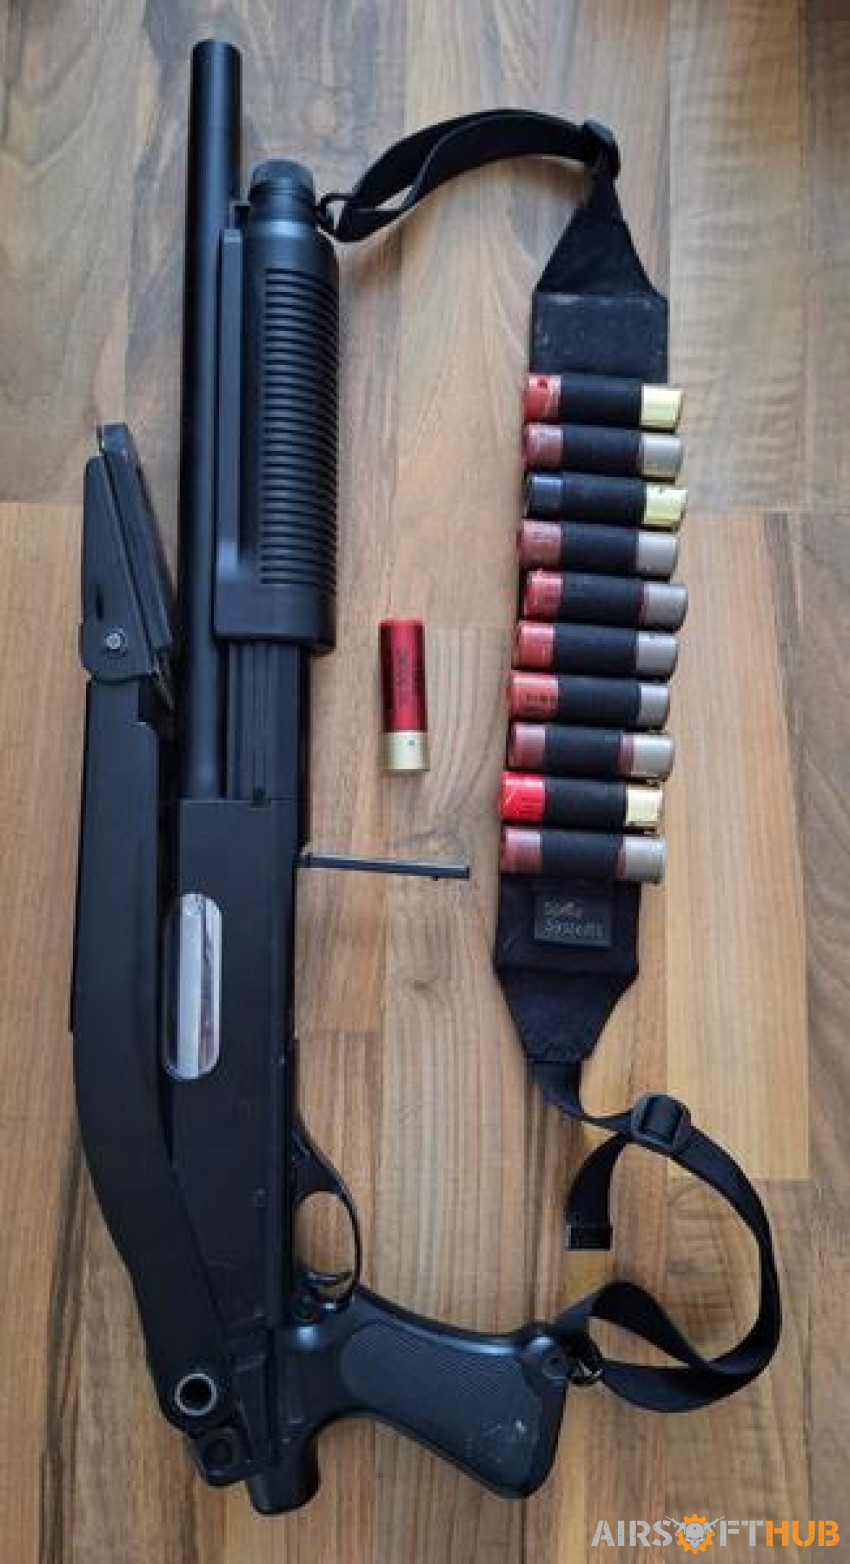 Spring tri-shot shotgun - Used airsoft equipment